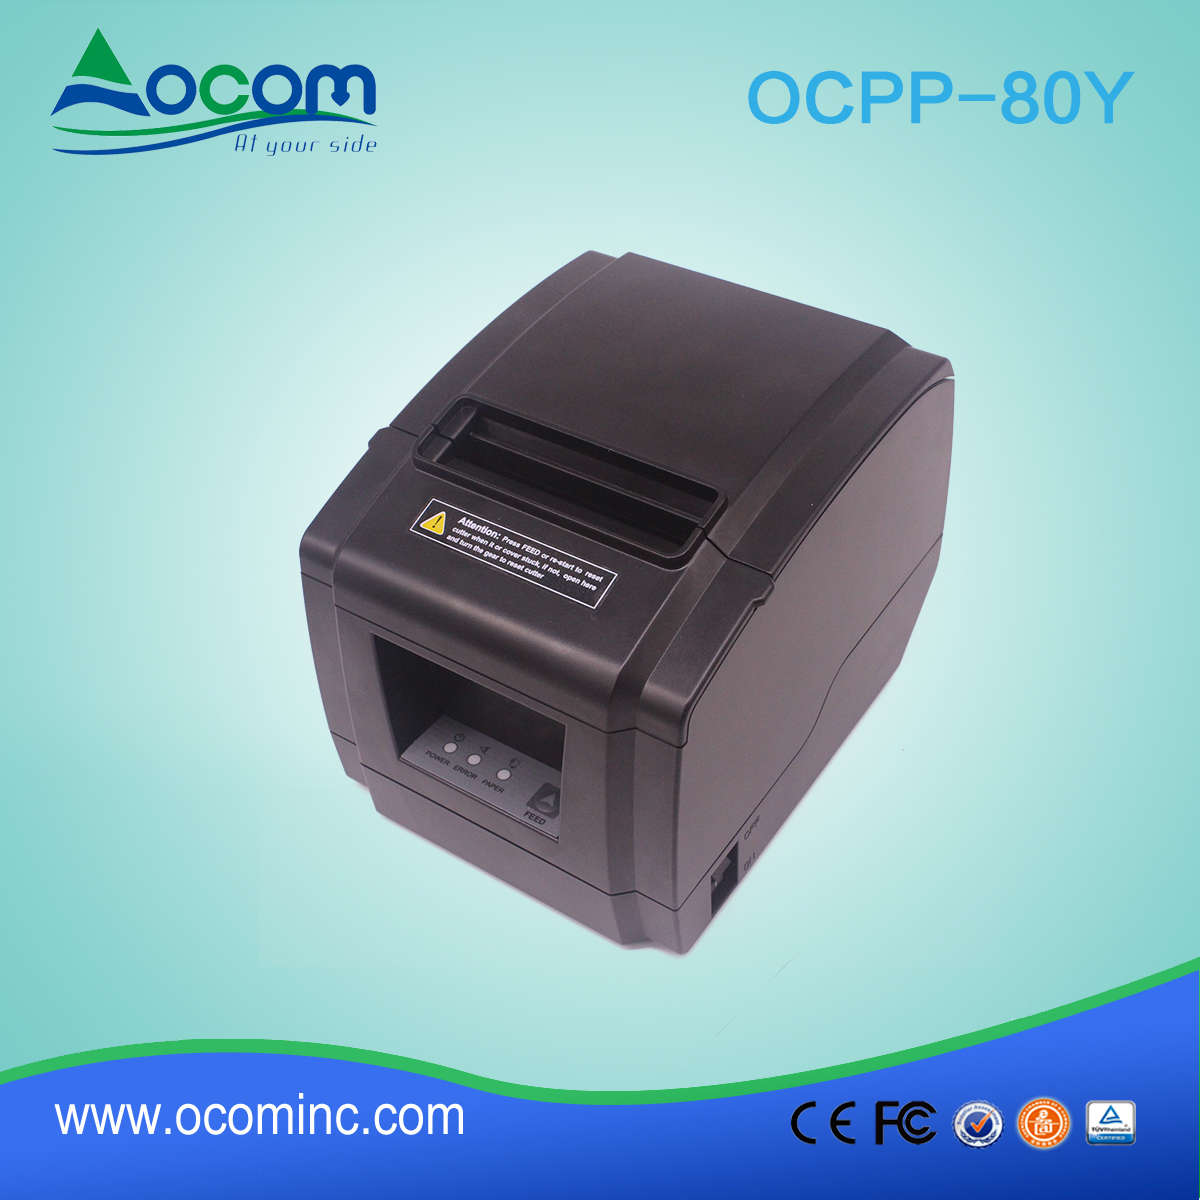 OCPP-80Y-U Neues Modell 80mm Thermo-Belegdrucker mit Auto Cutter USB Port